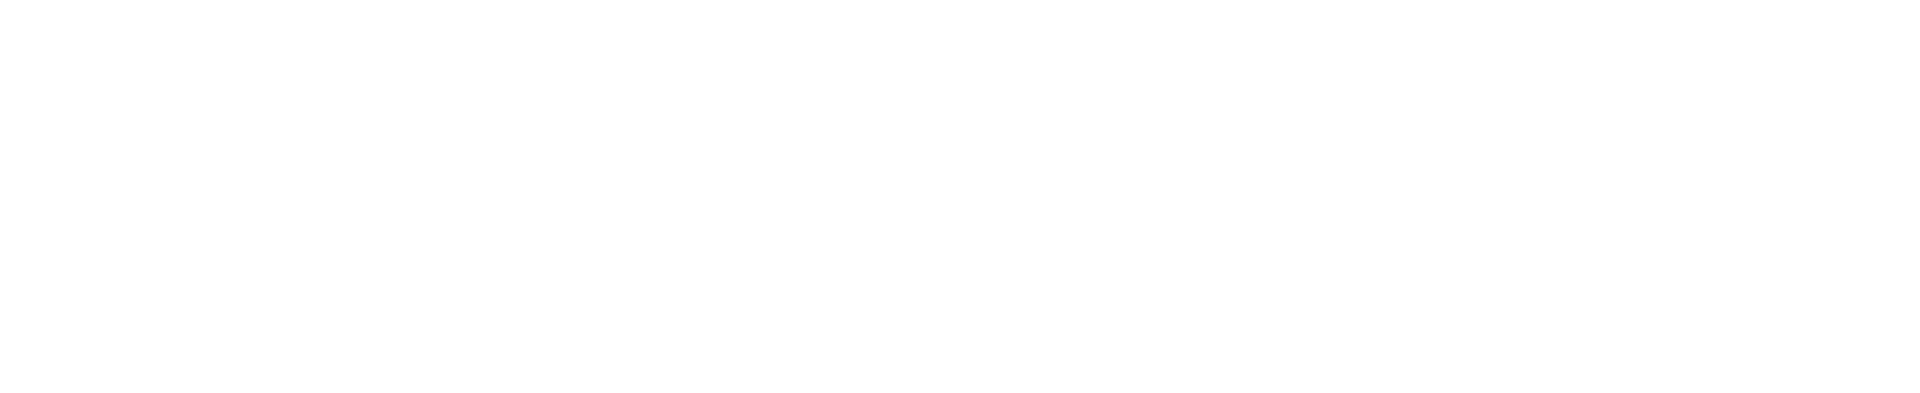 Van der Valk International logo